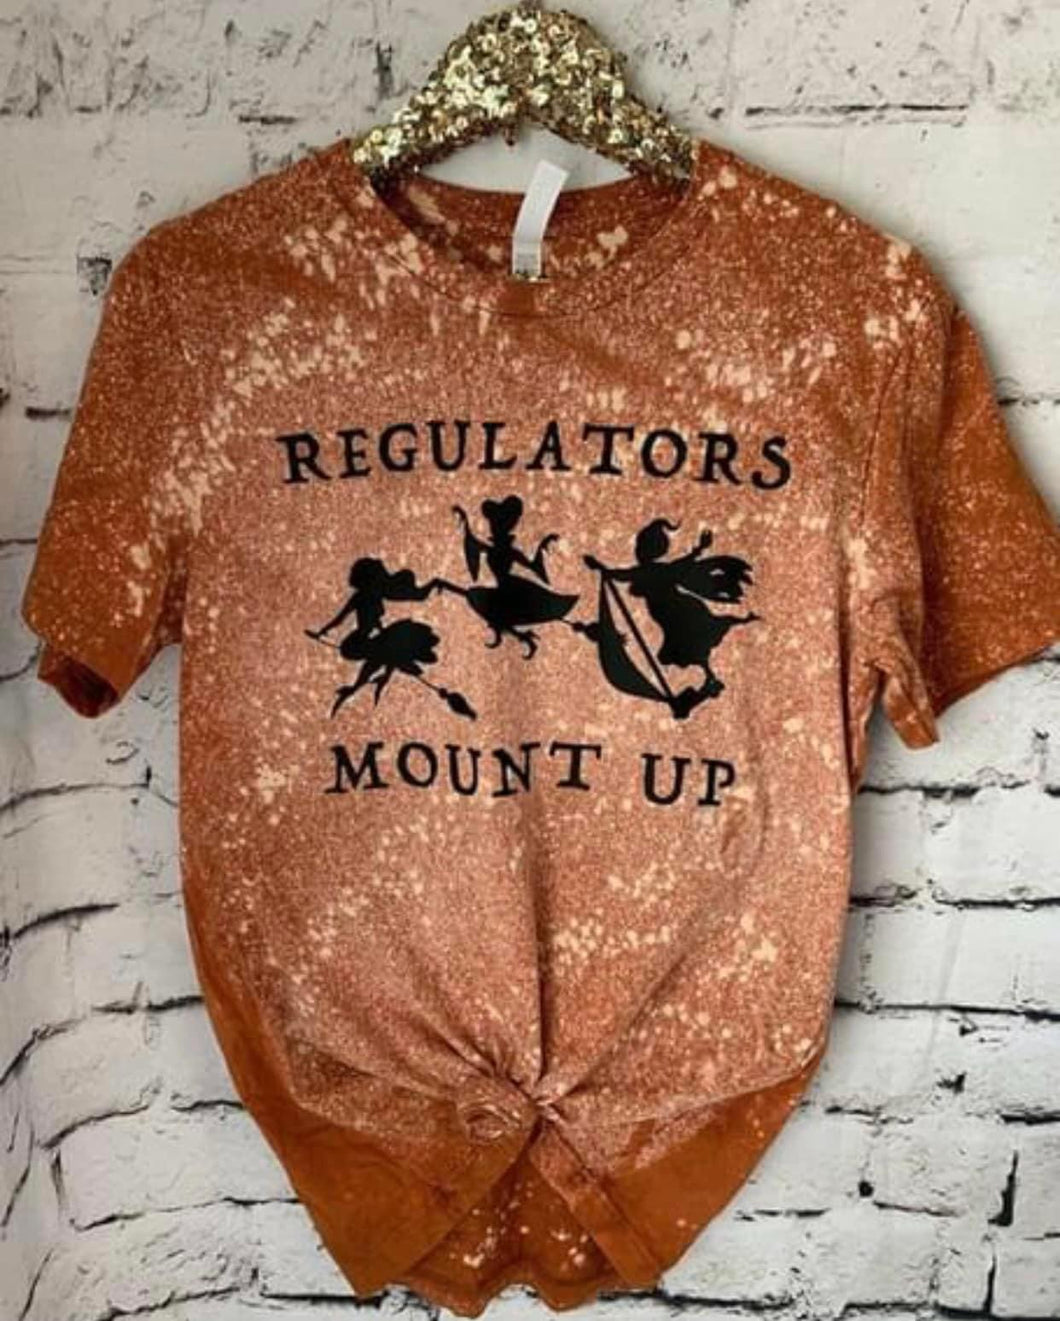 Regulators mount up bleached graphic tee crewneck hoodie or long sleeve - Mavictoria Designs Hot Press Express